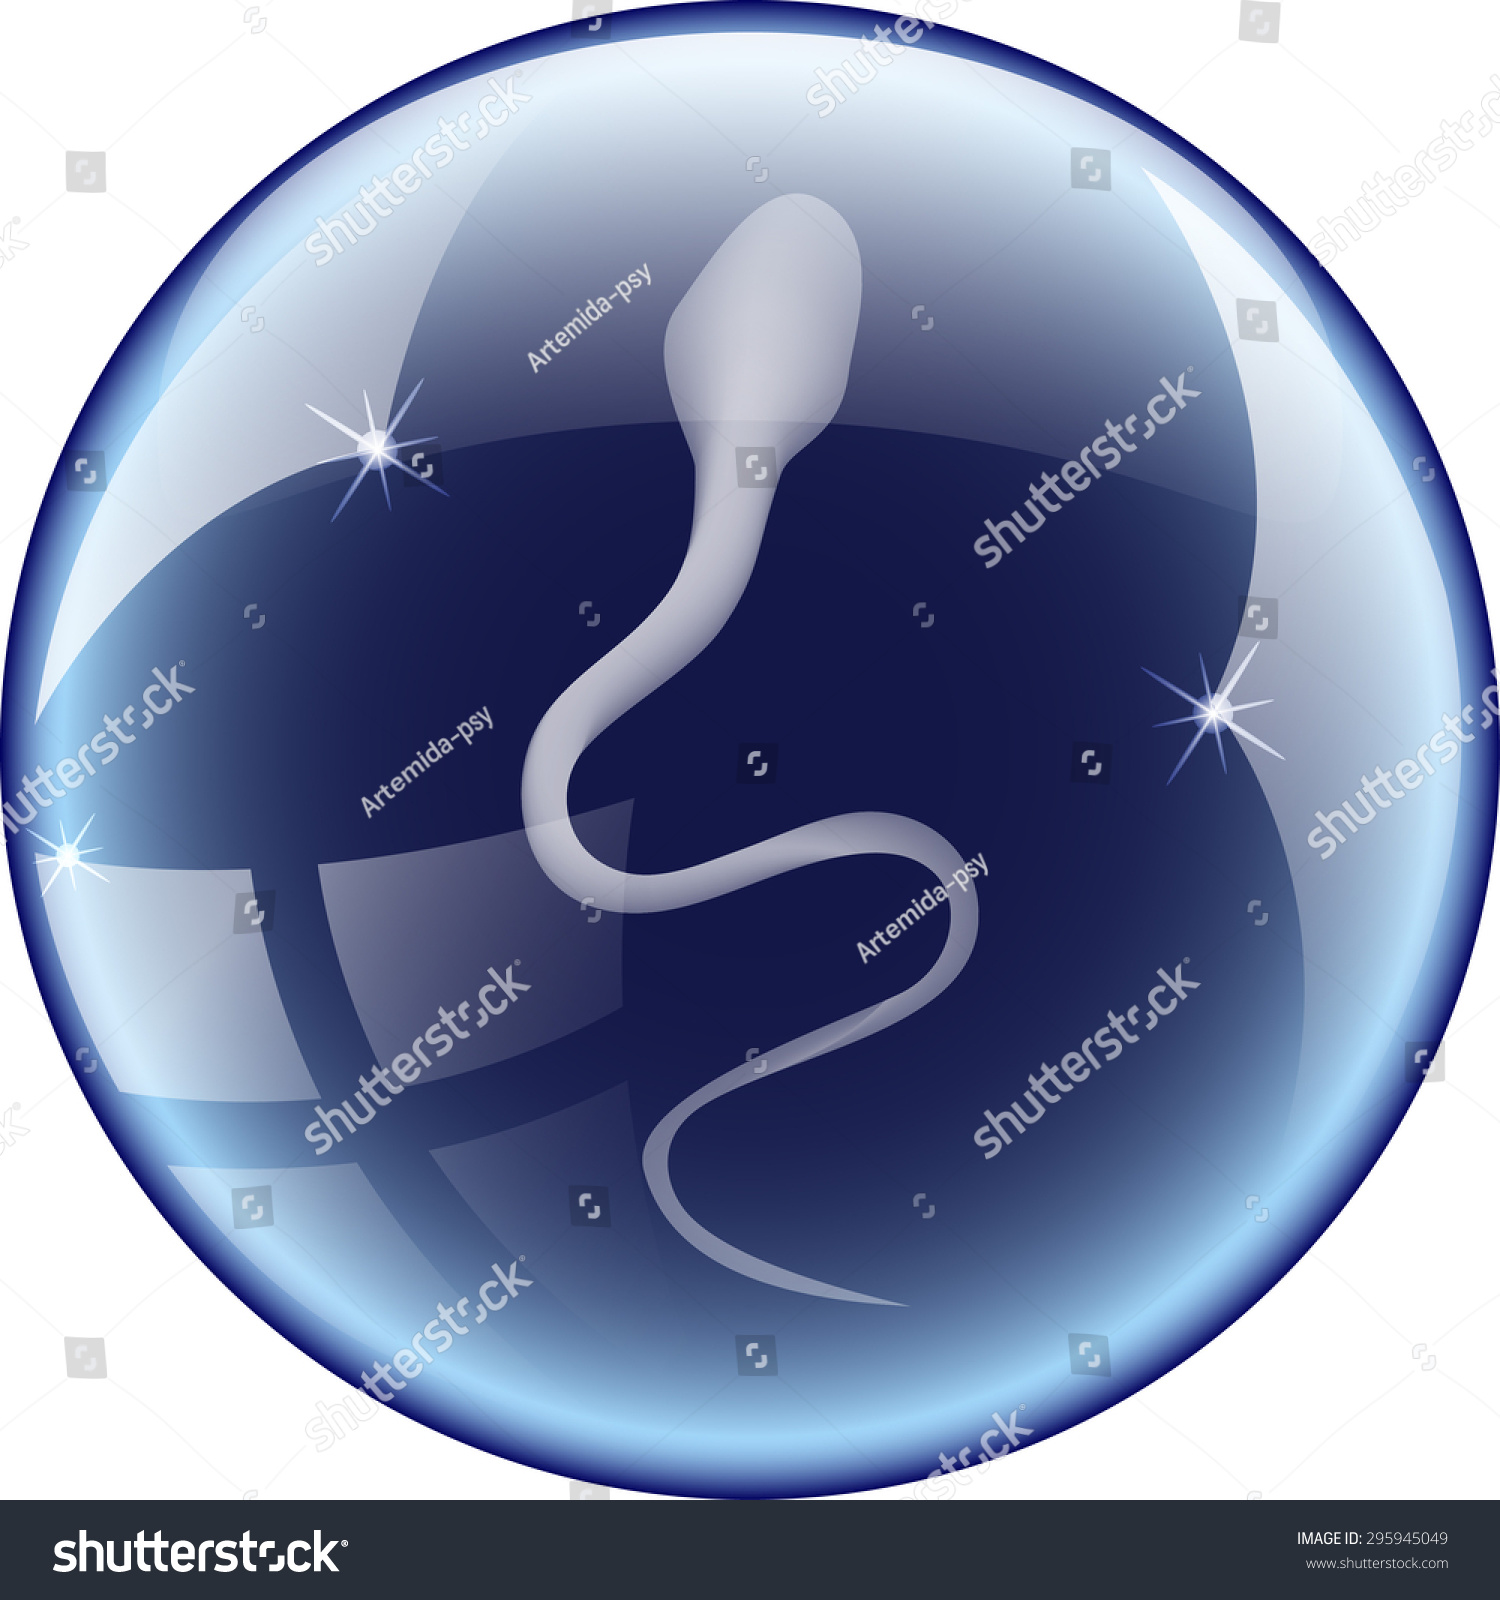 Vektor Stok Illustration Male Sex Cells Sperm Fertilization Tanpa Royalti 295945049 Shutterstock 6927